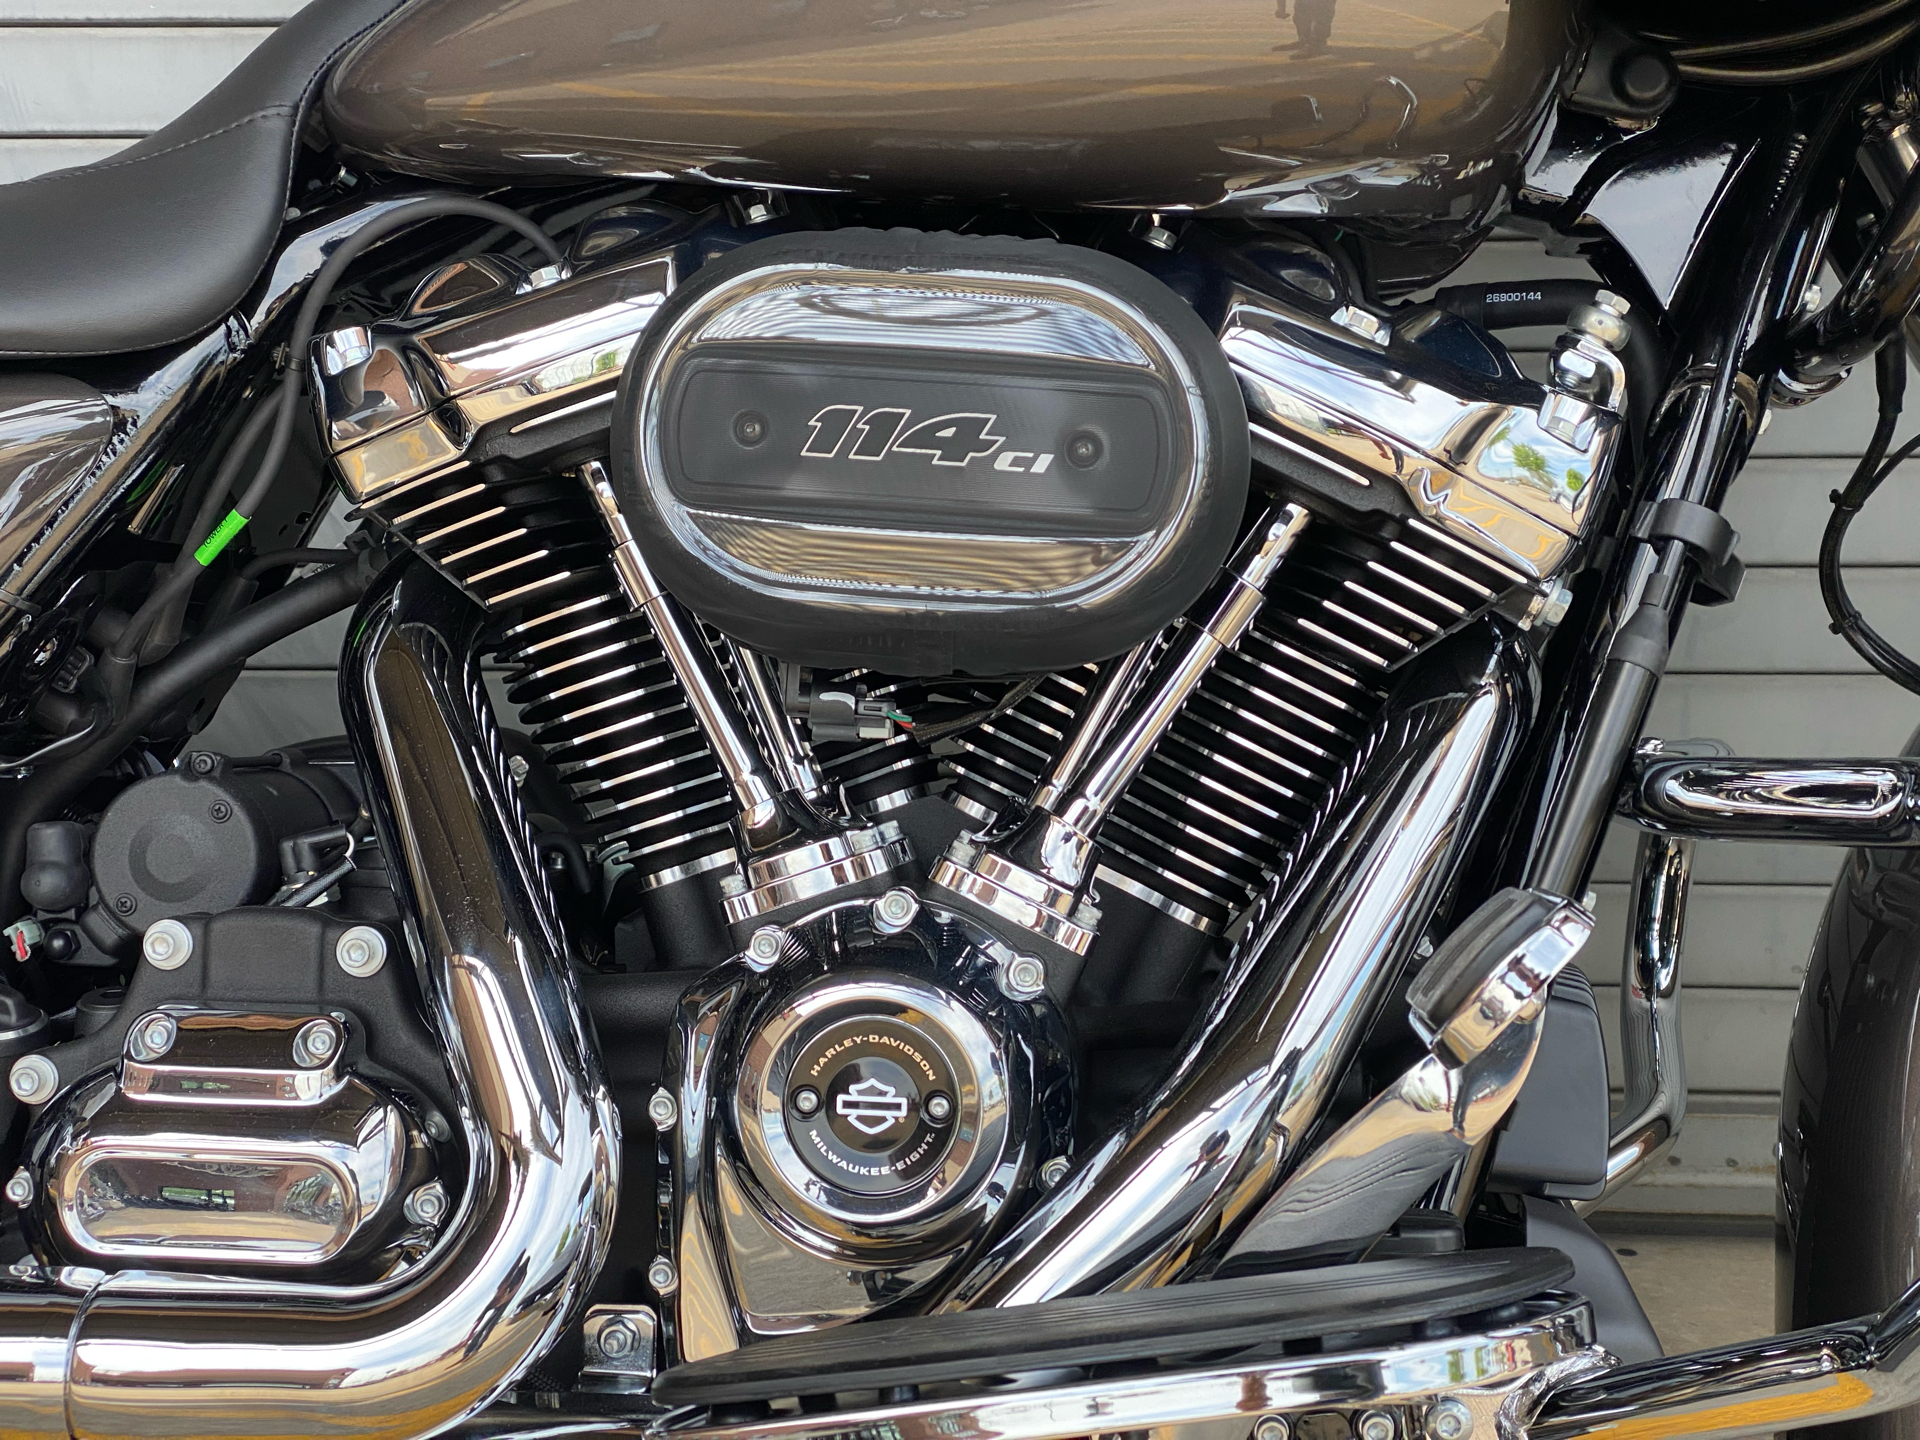 2023 Harley-Davidson Road Glide® Special in Carrollton, Texas - Photo 10